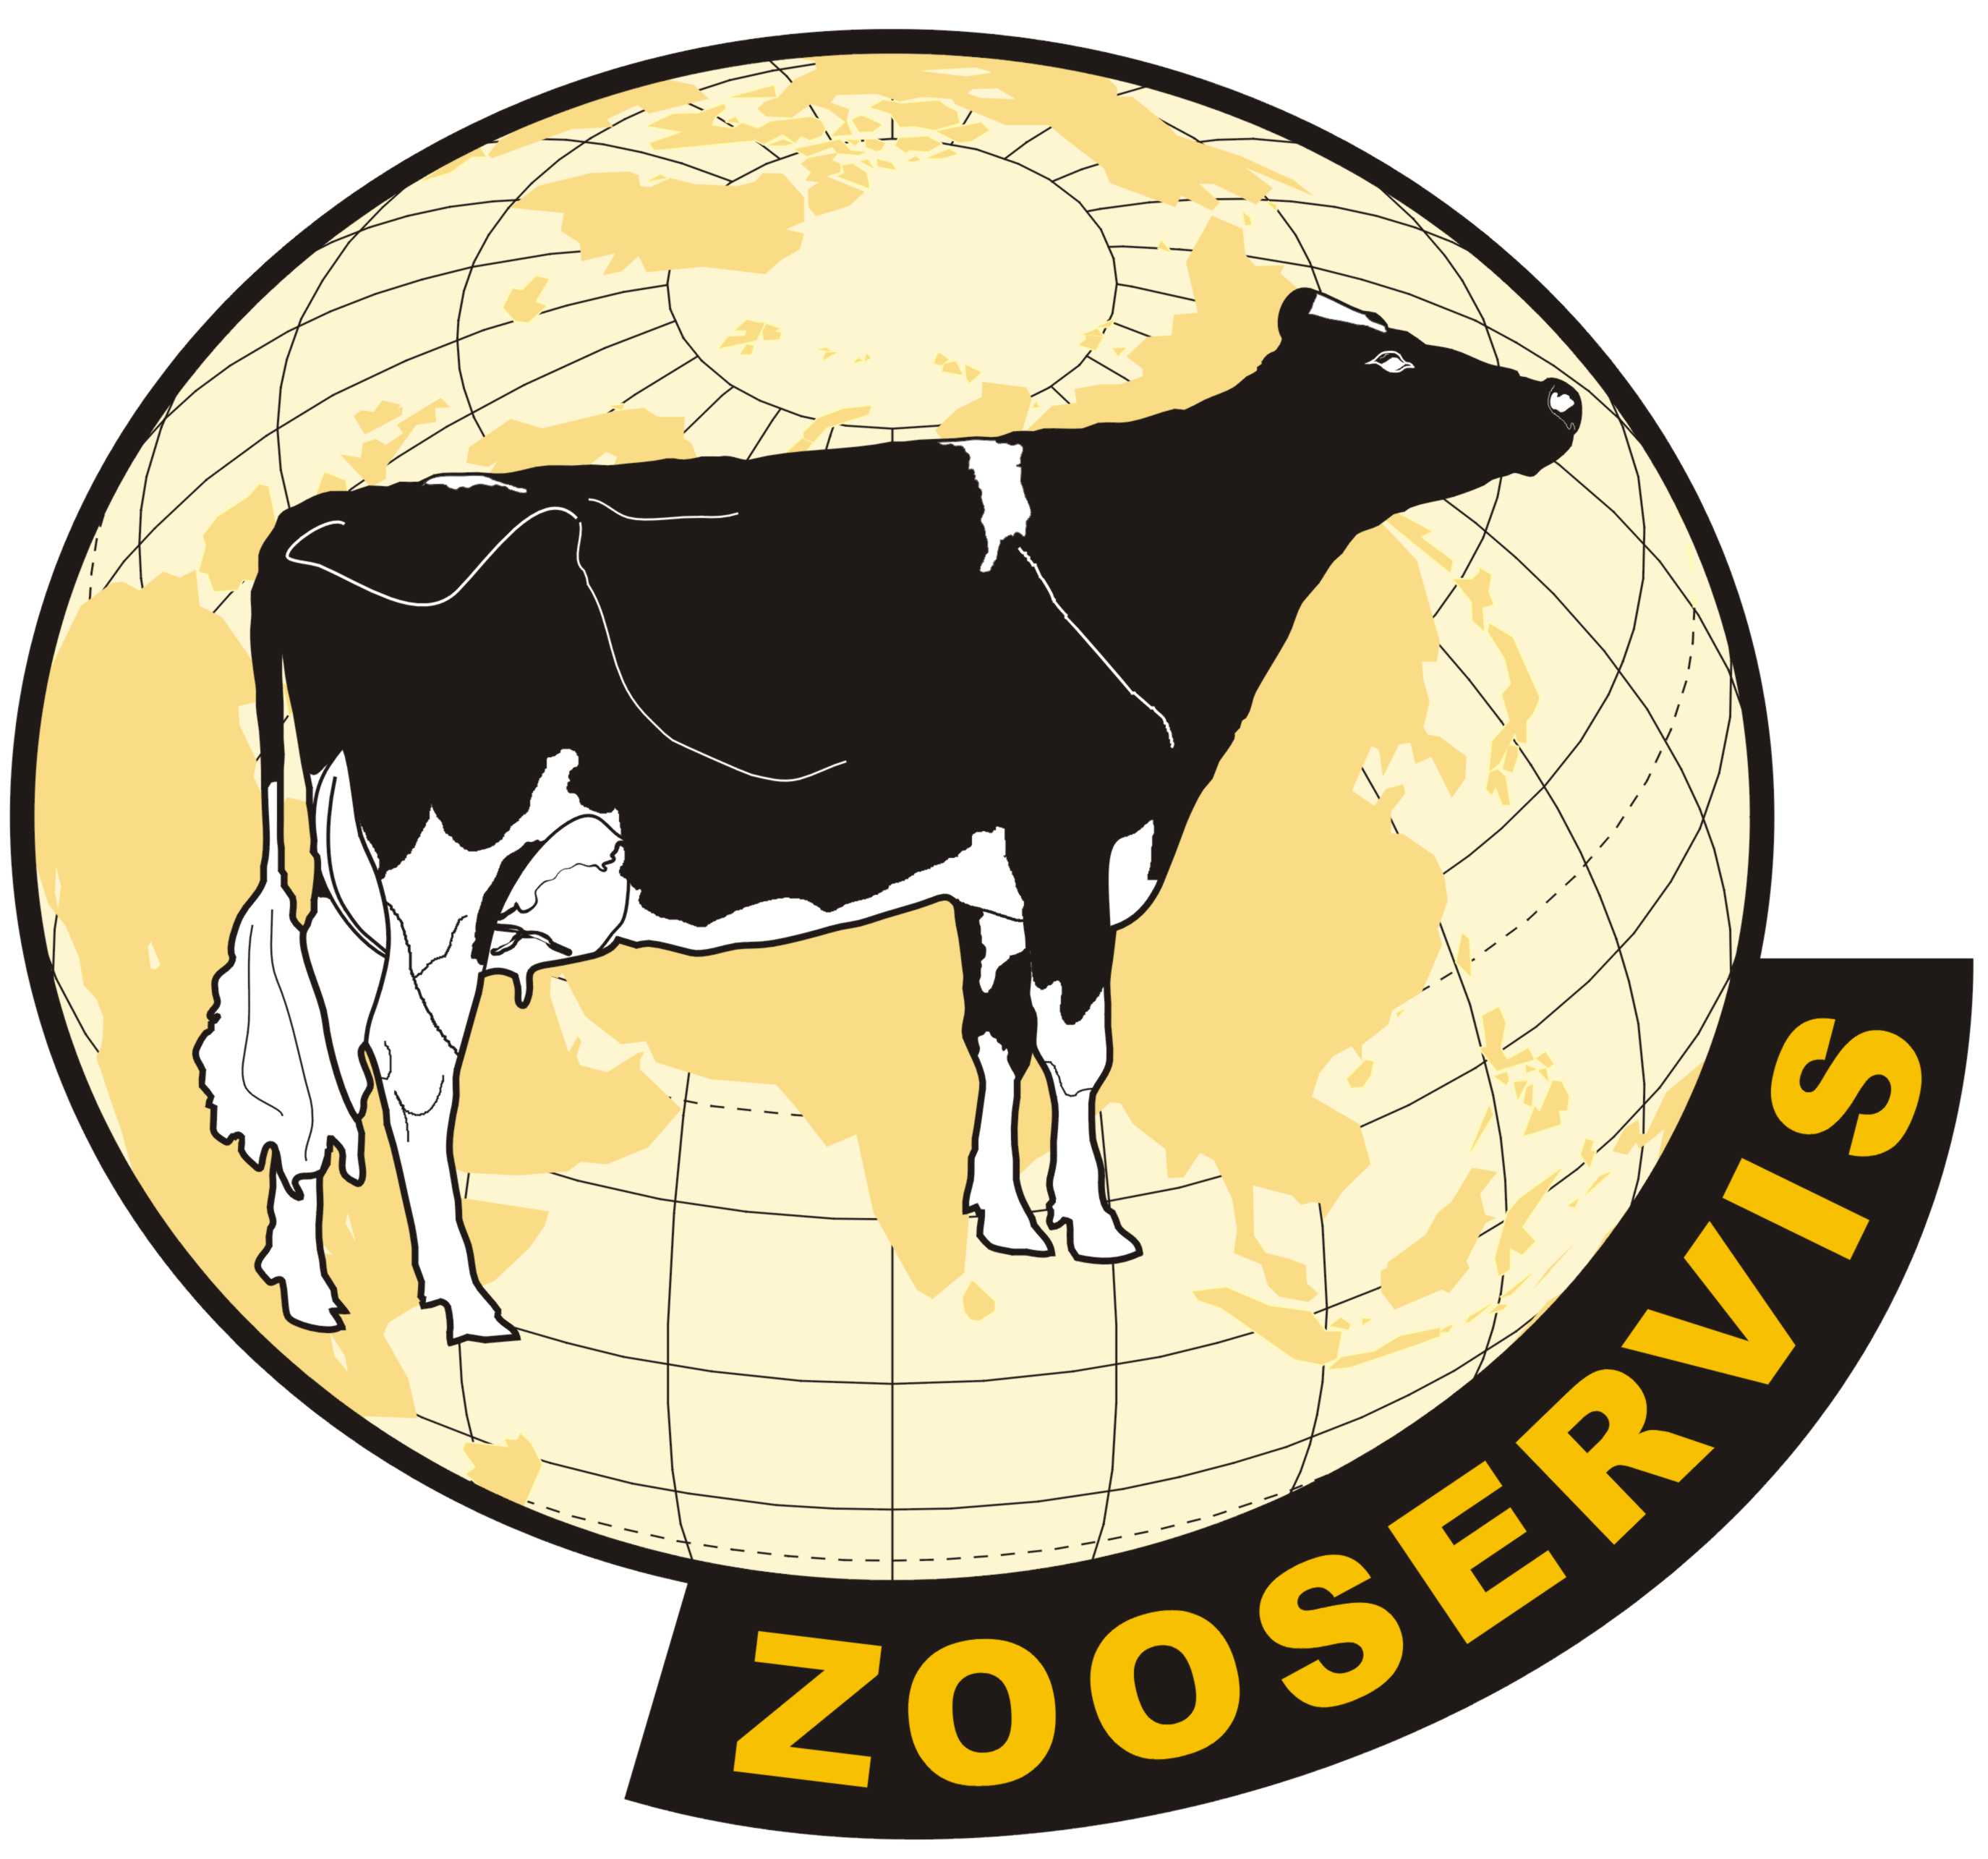 Zooservis